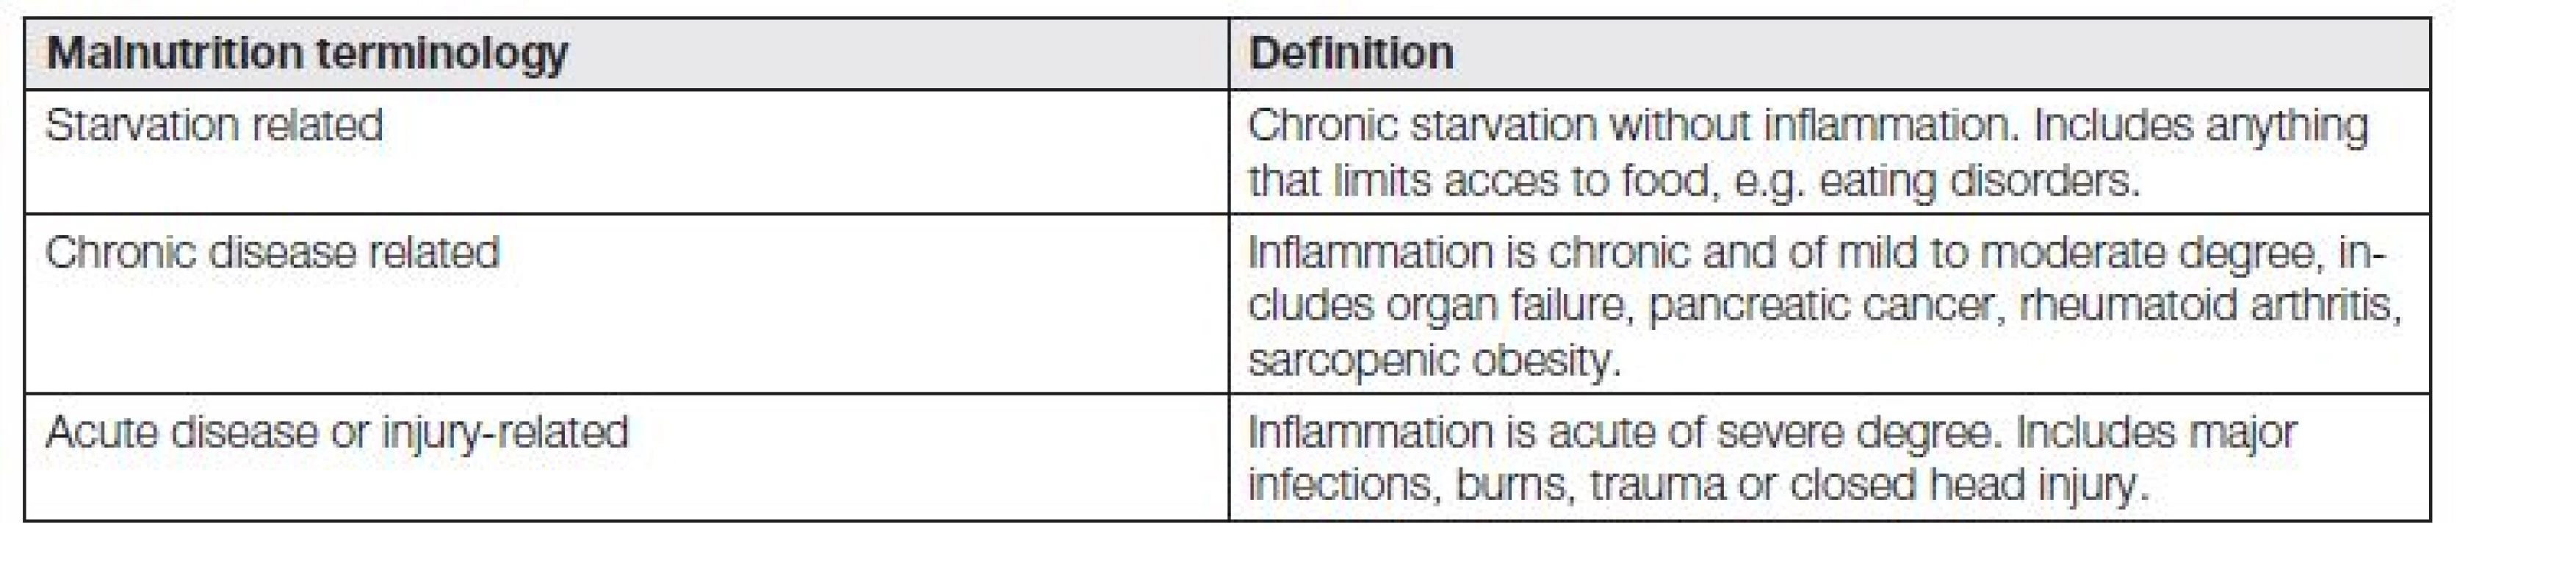 Malnutrition aetiology-based terminology [10].